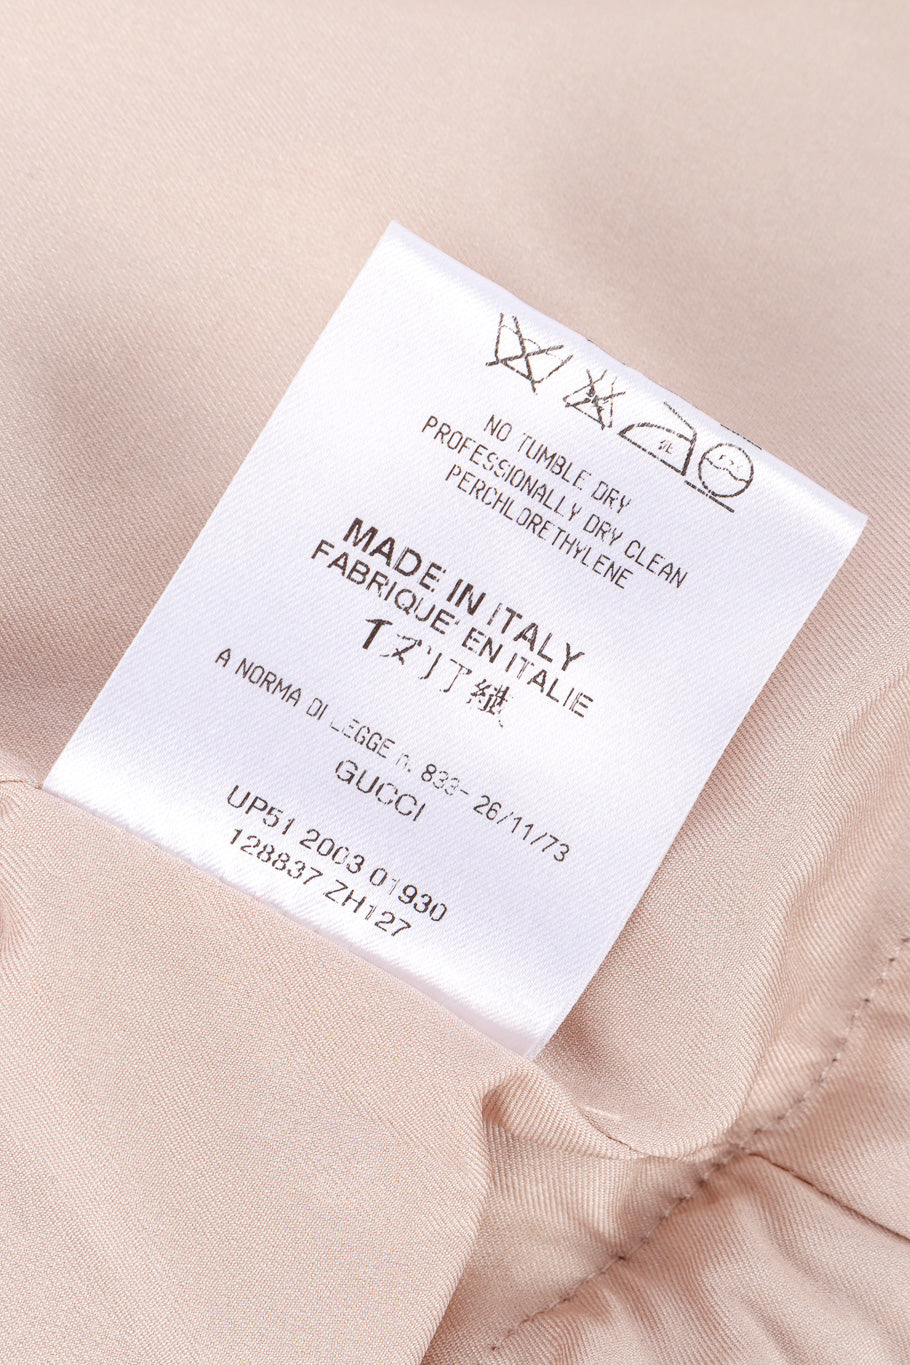 Silk jacket by Gucci fabric tag back @recessla